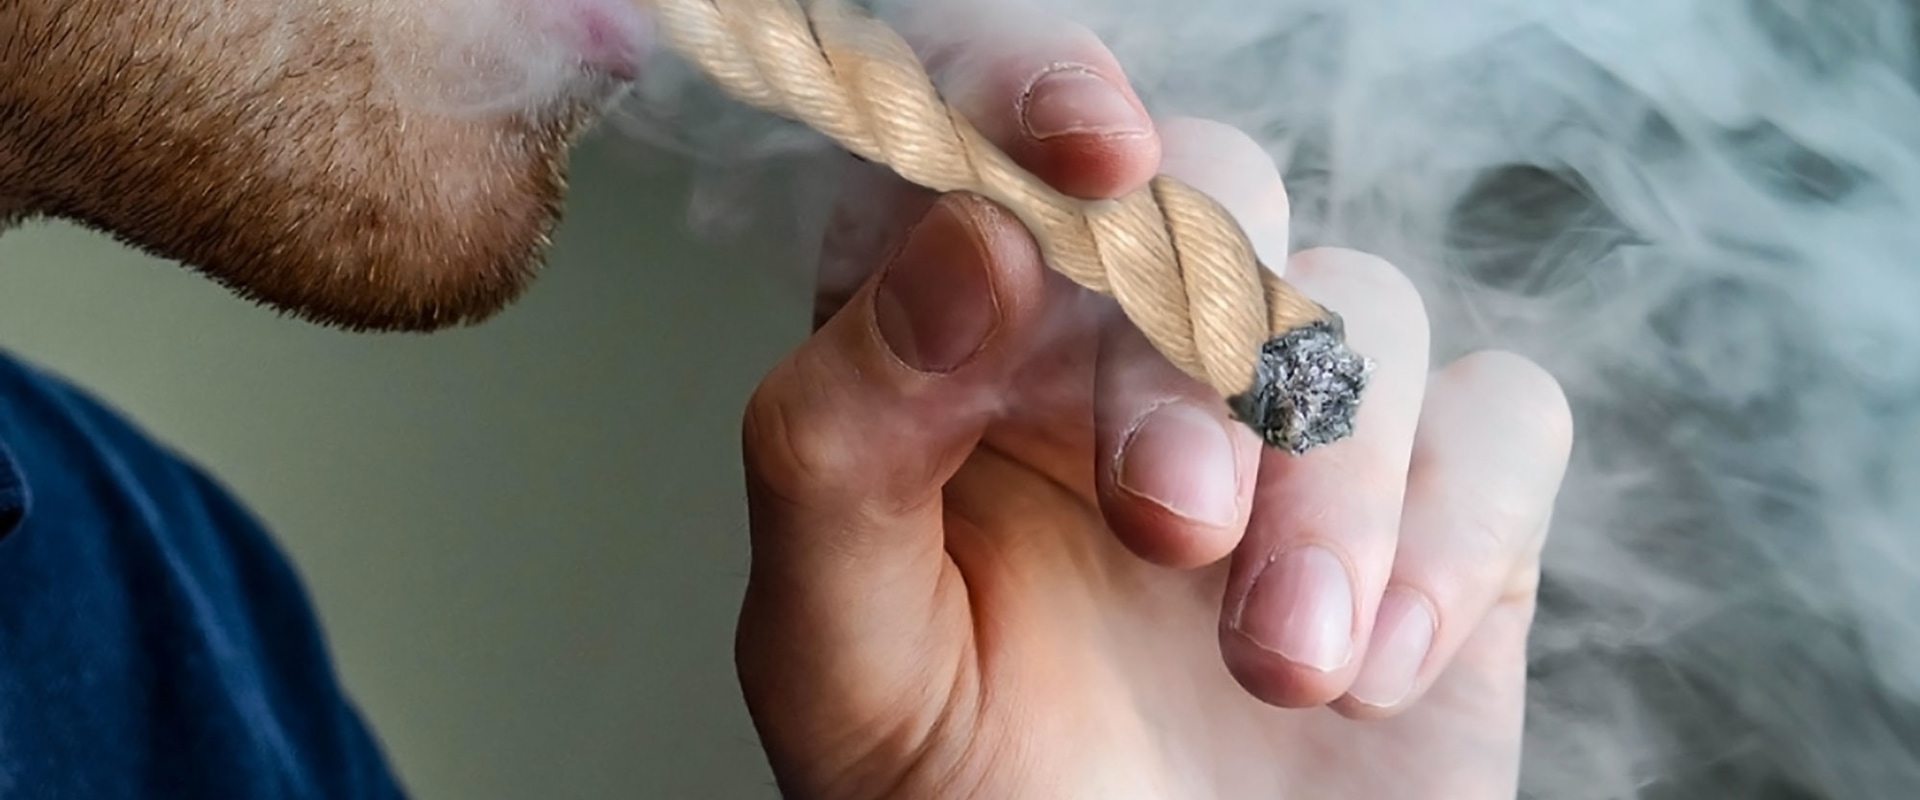 Are Hemp Cigarettes Safe to Smoke?